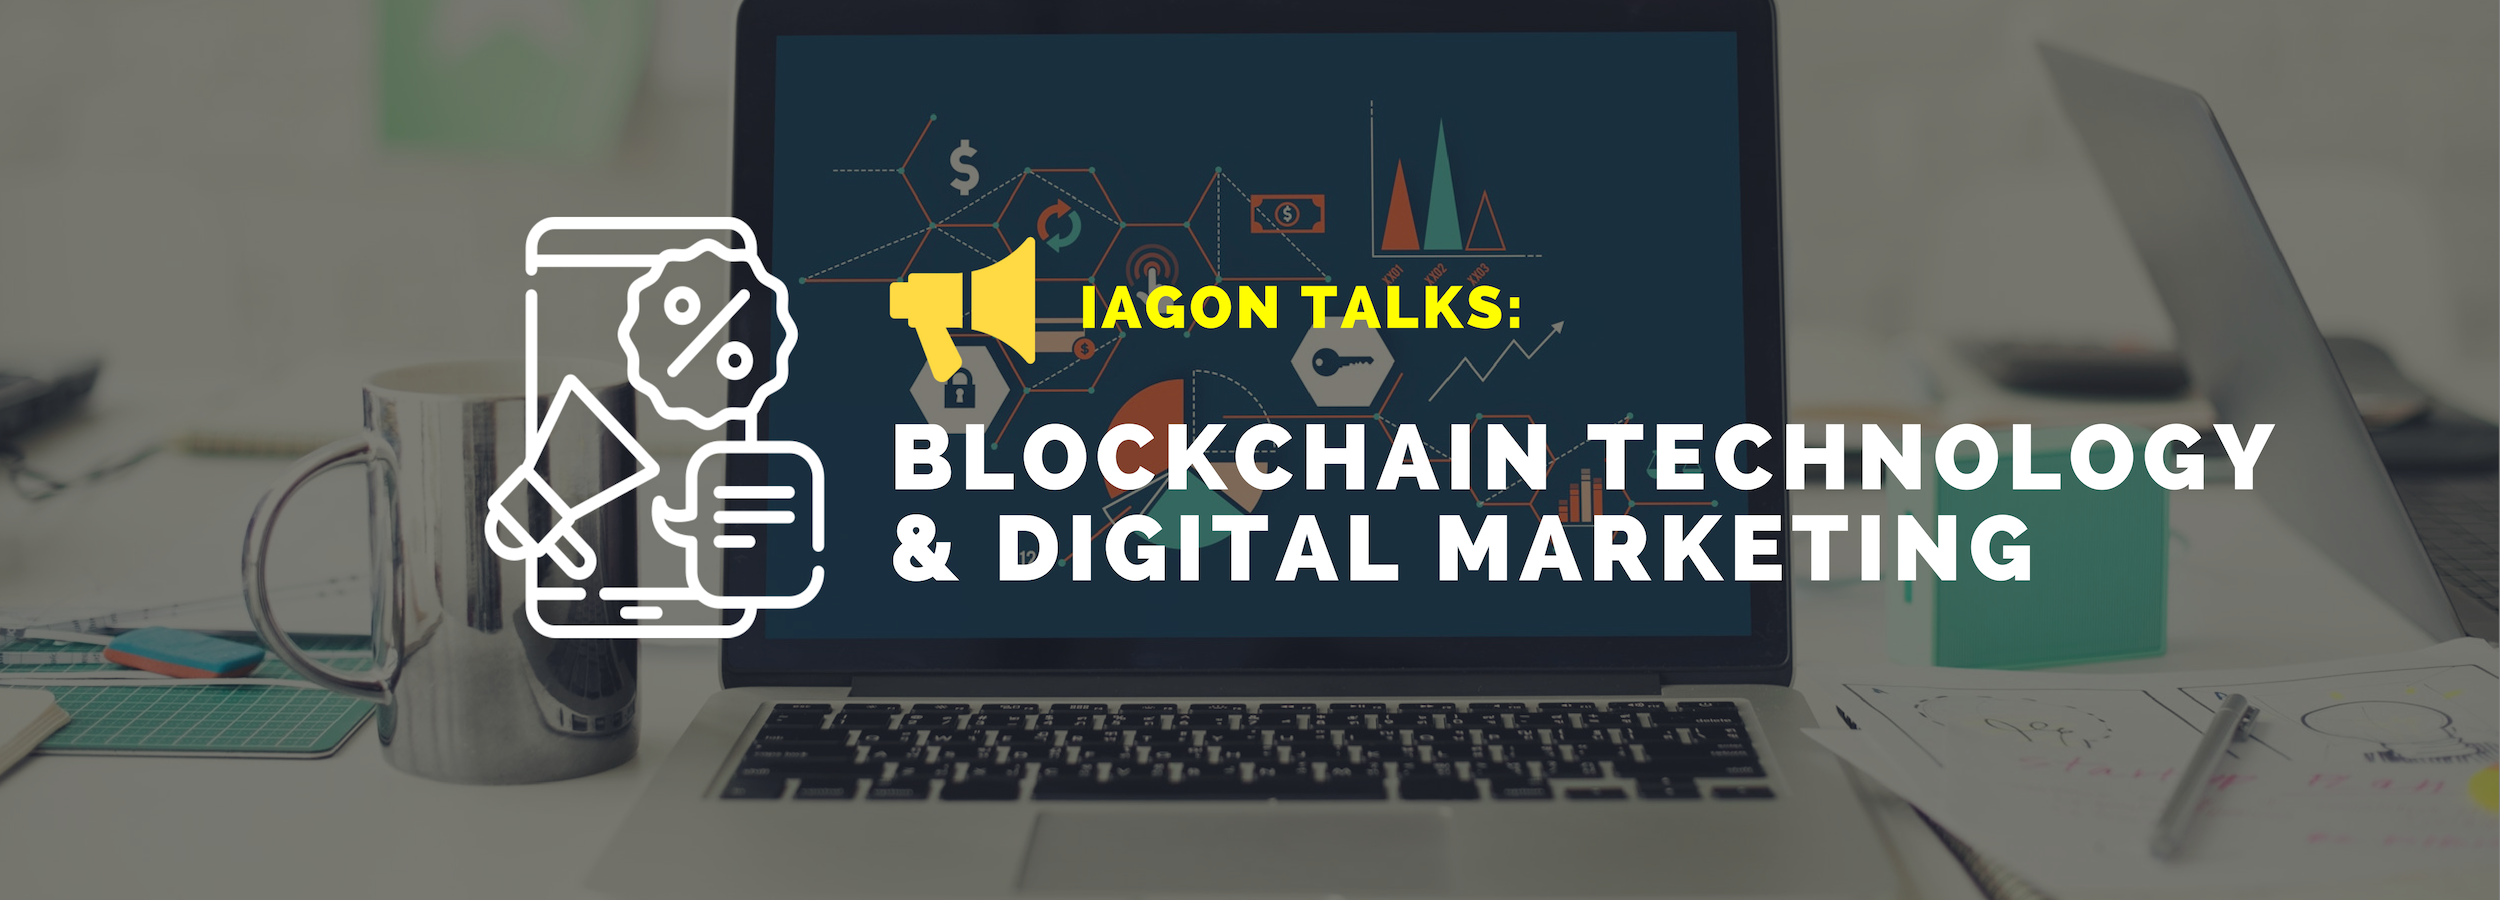 IAGON Talks: Blockchain Technology & Digital Marketing